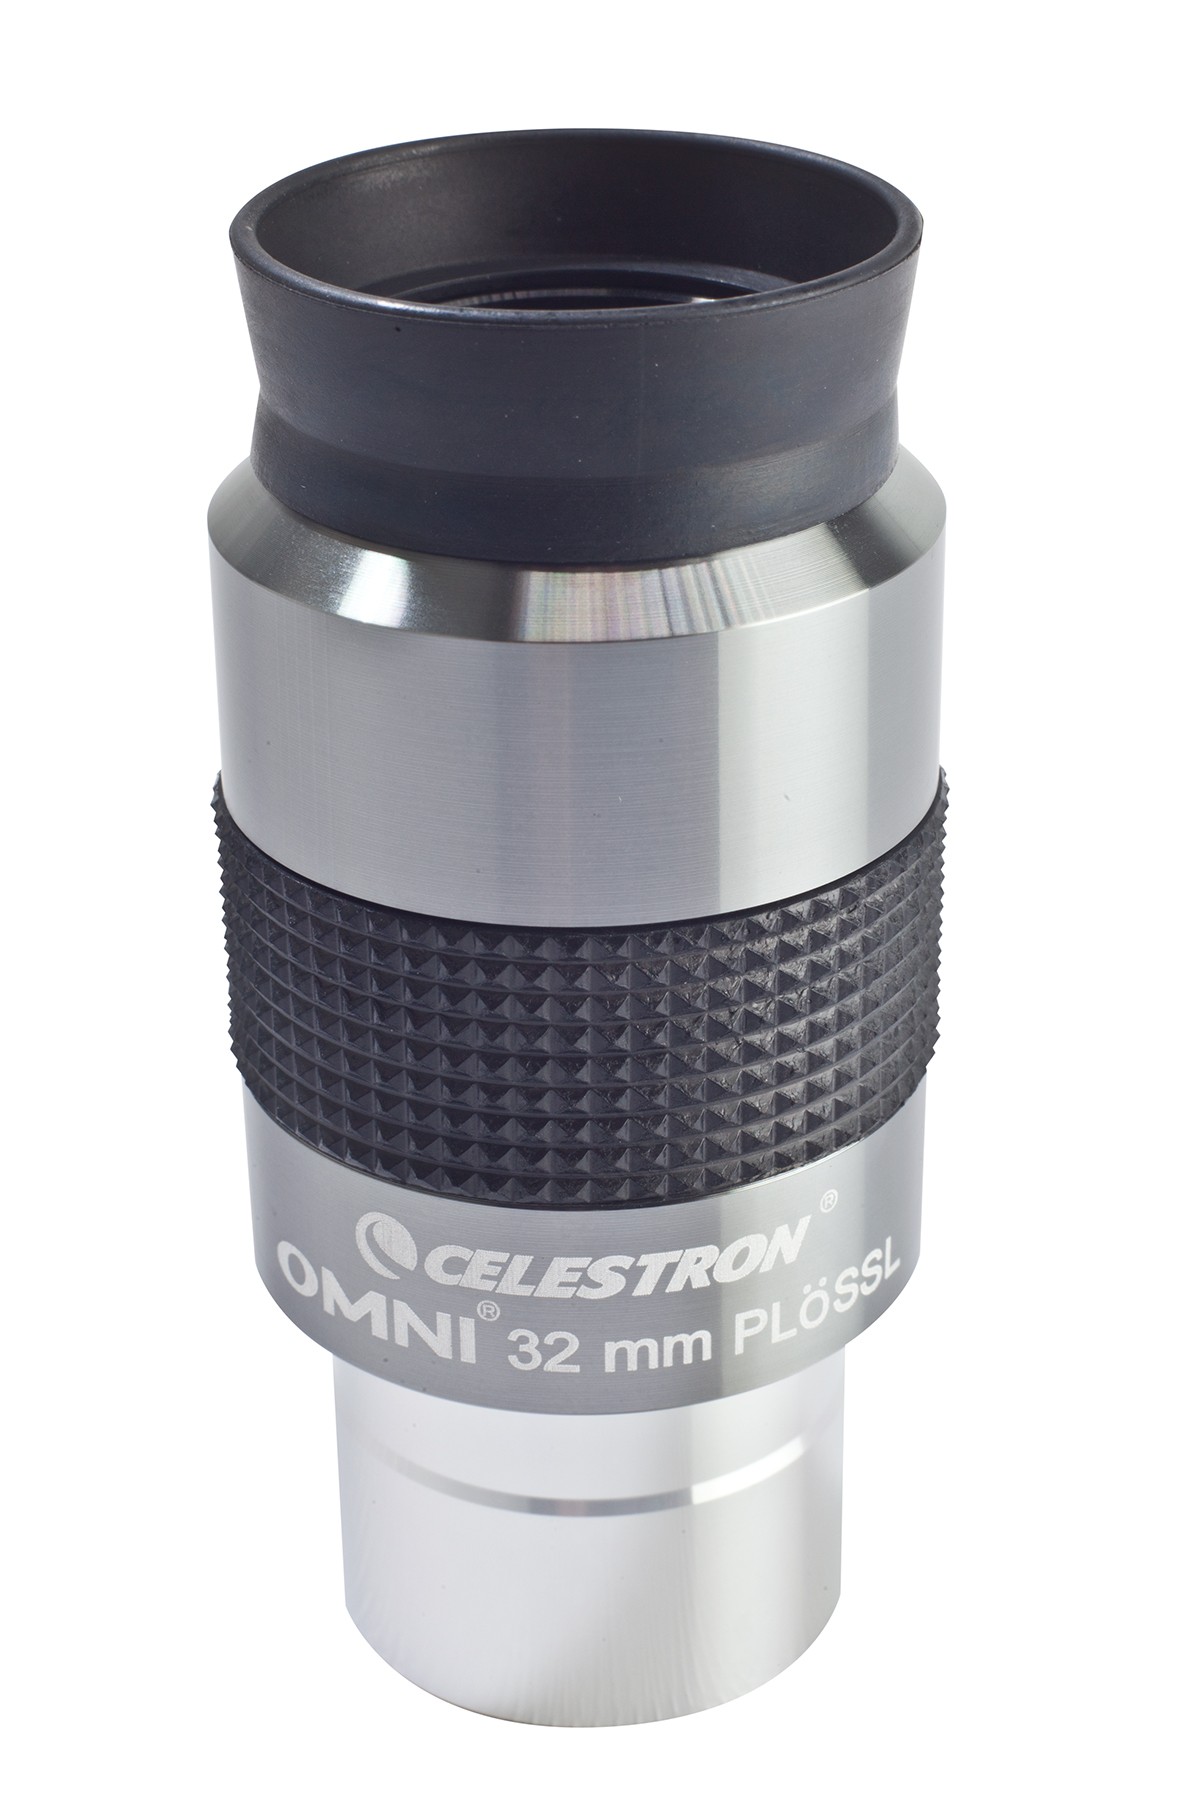 Für Celestron 1,25 Zoll Omni Plossl Okular Teleskop Okular Hohe Qualität X1R2 